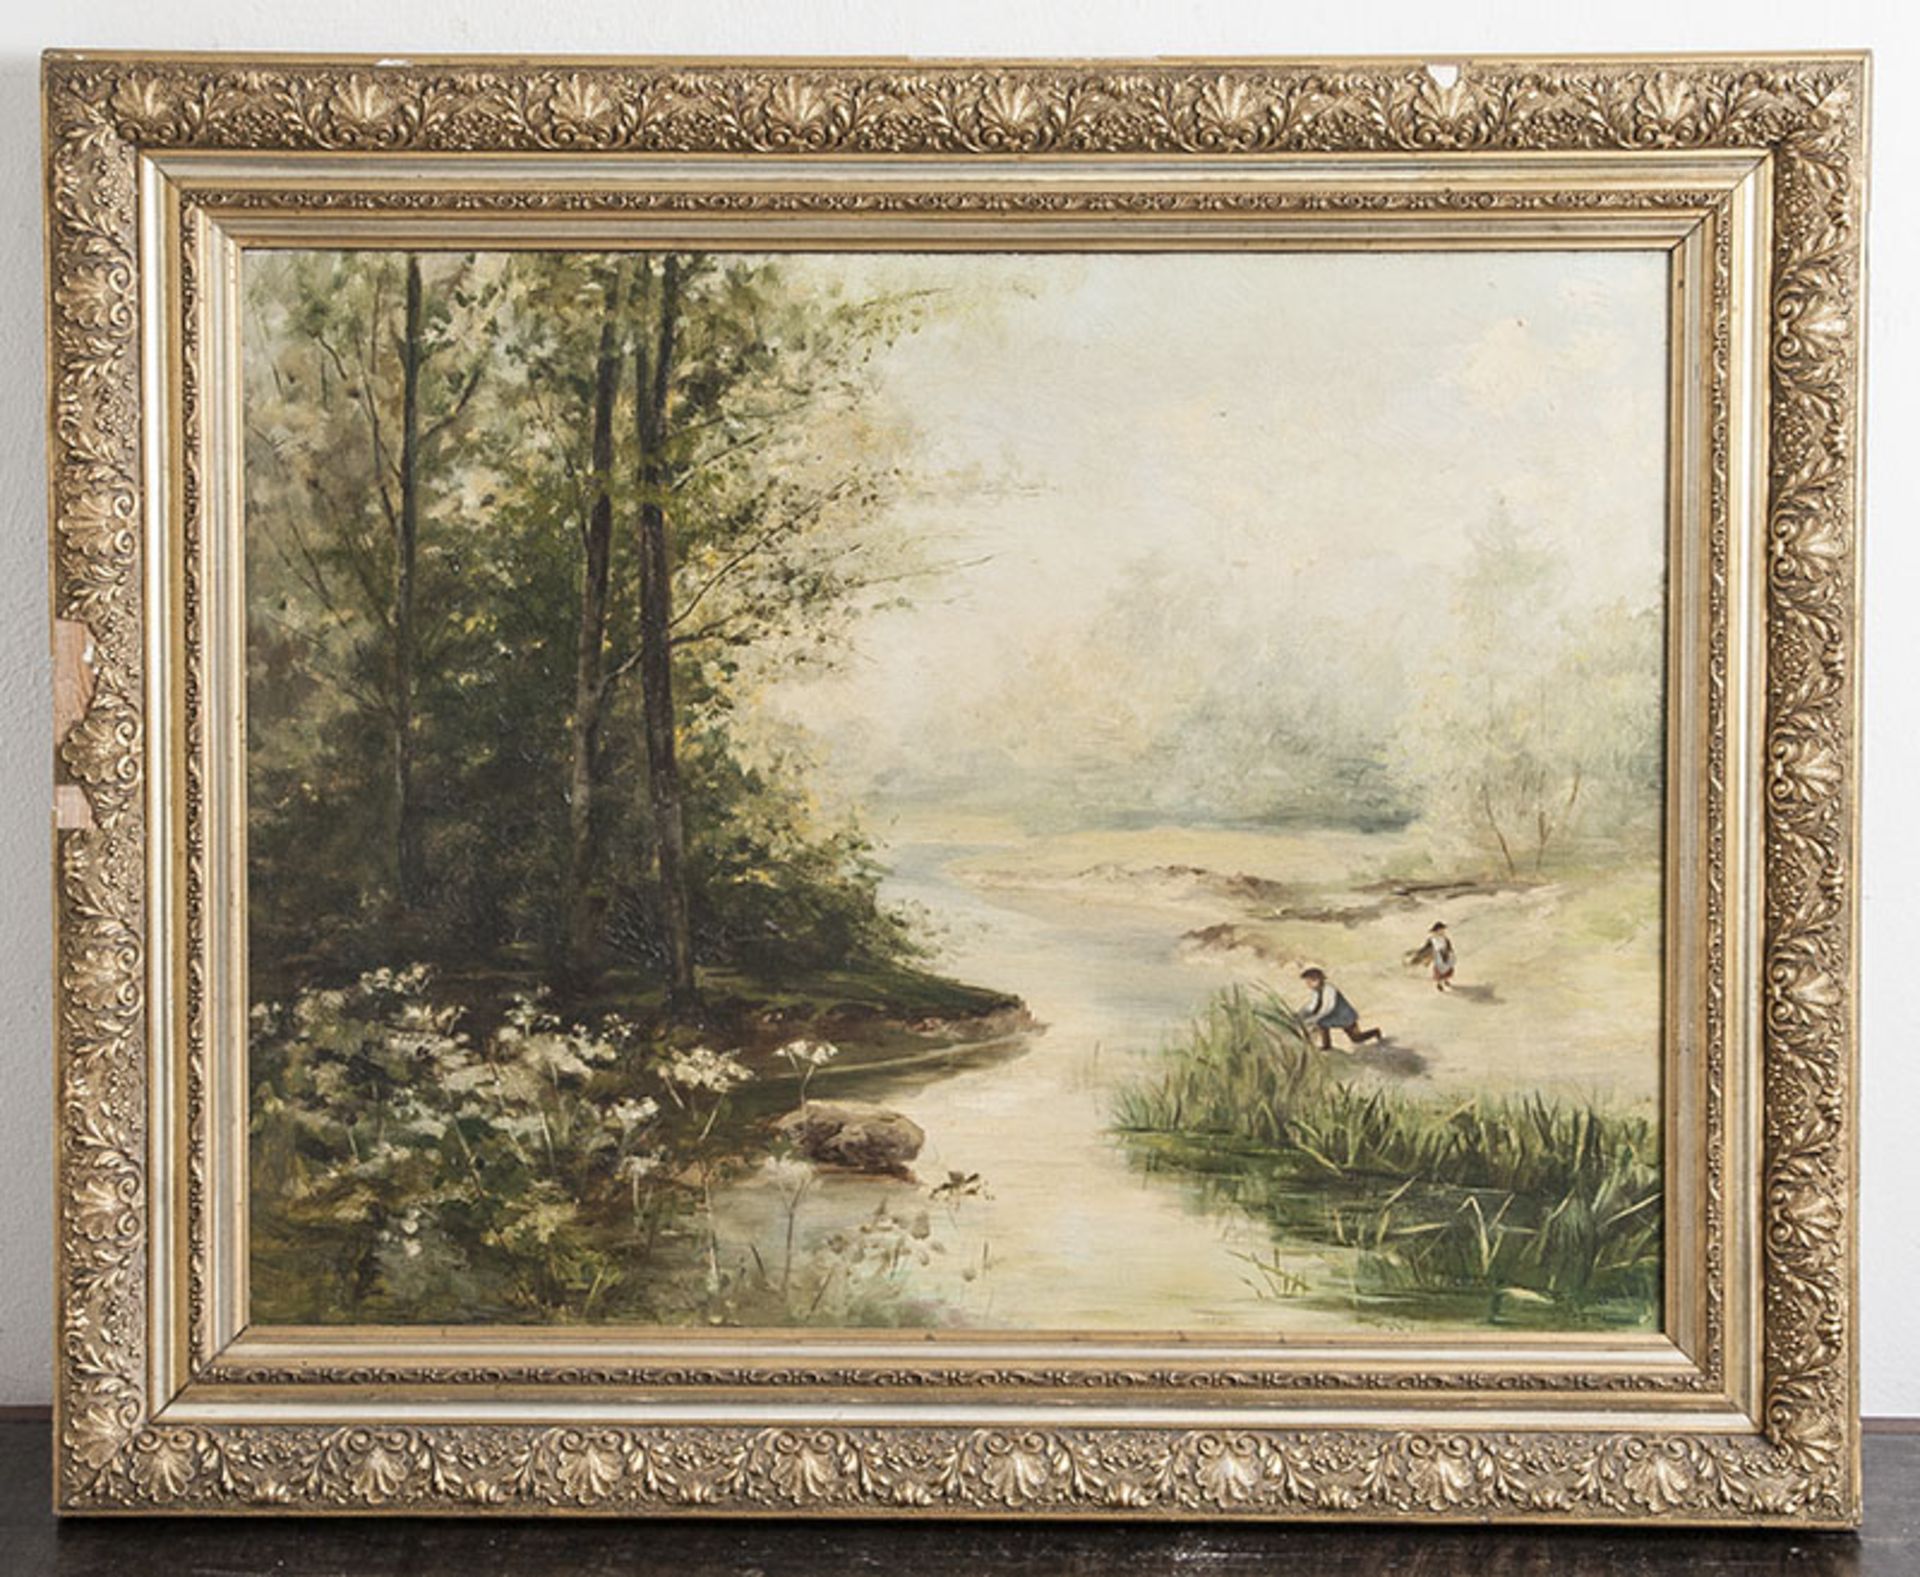 Unbekannter Künstler (20. Jahrhundert), Schilfsammler am Flußufer, Öl/Lw, ca. 56 x 73 cm,gerahmt.